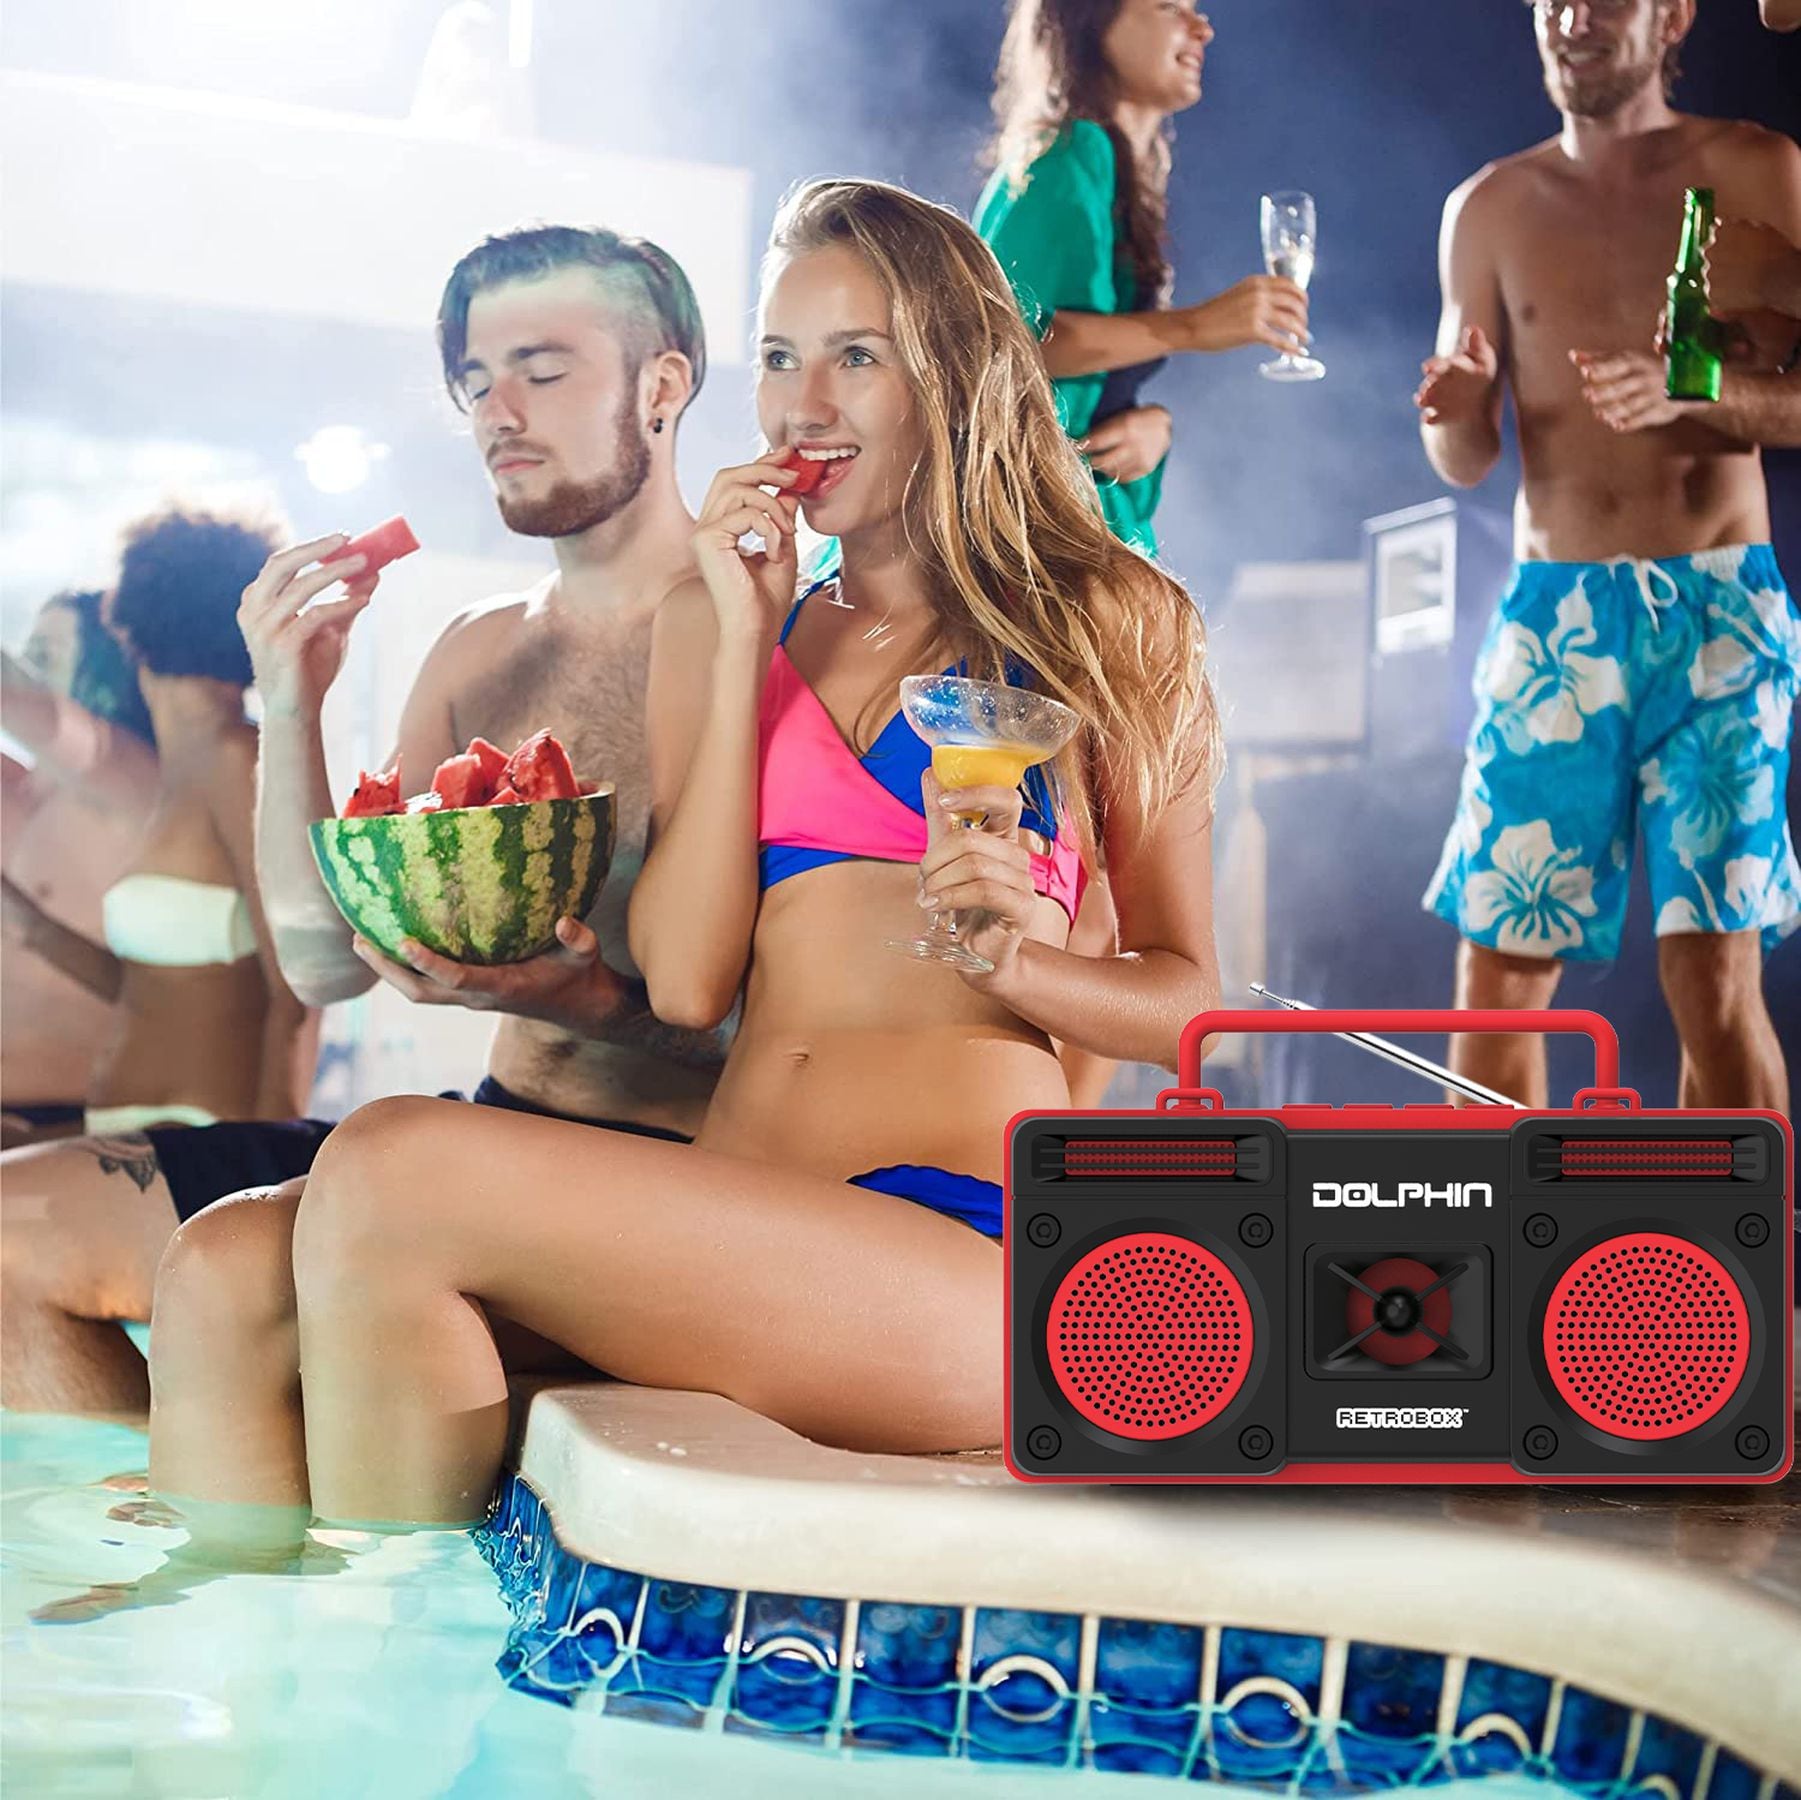 Dolphin Retrobox Mini RTX-10 - Altavoces Bluetooth con radio FM, unidad  USB, tarjeta micro SD reproductor de MP3, conector auxiliar de 0.138 in